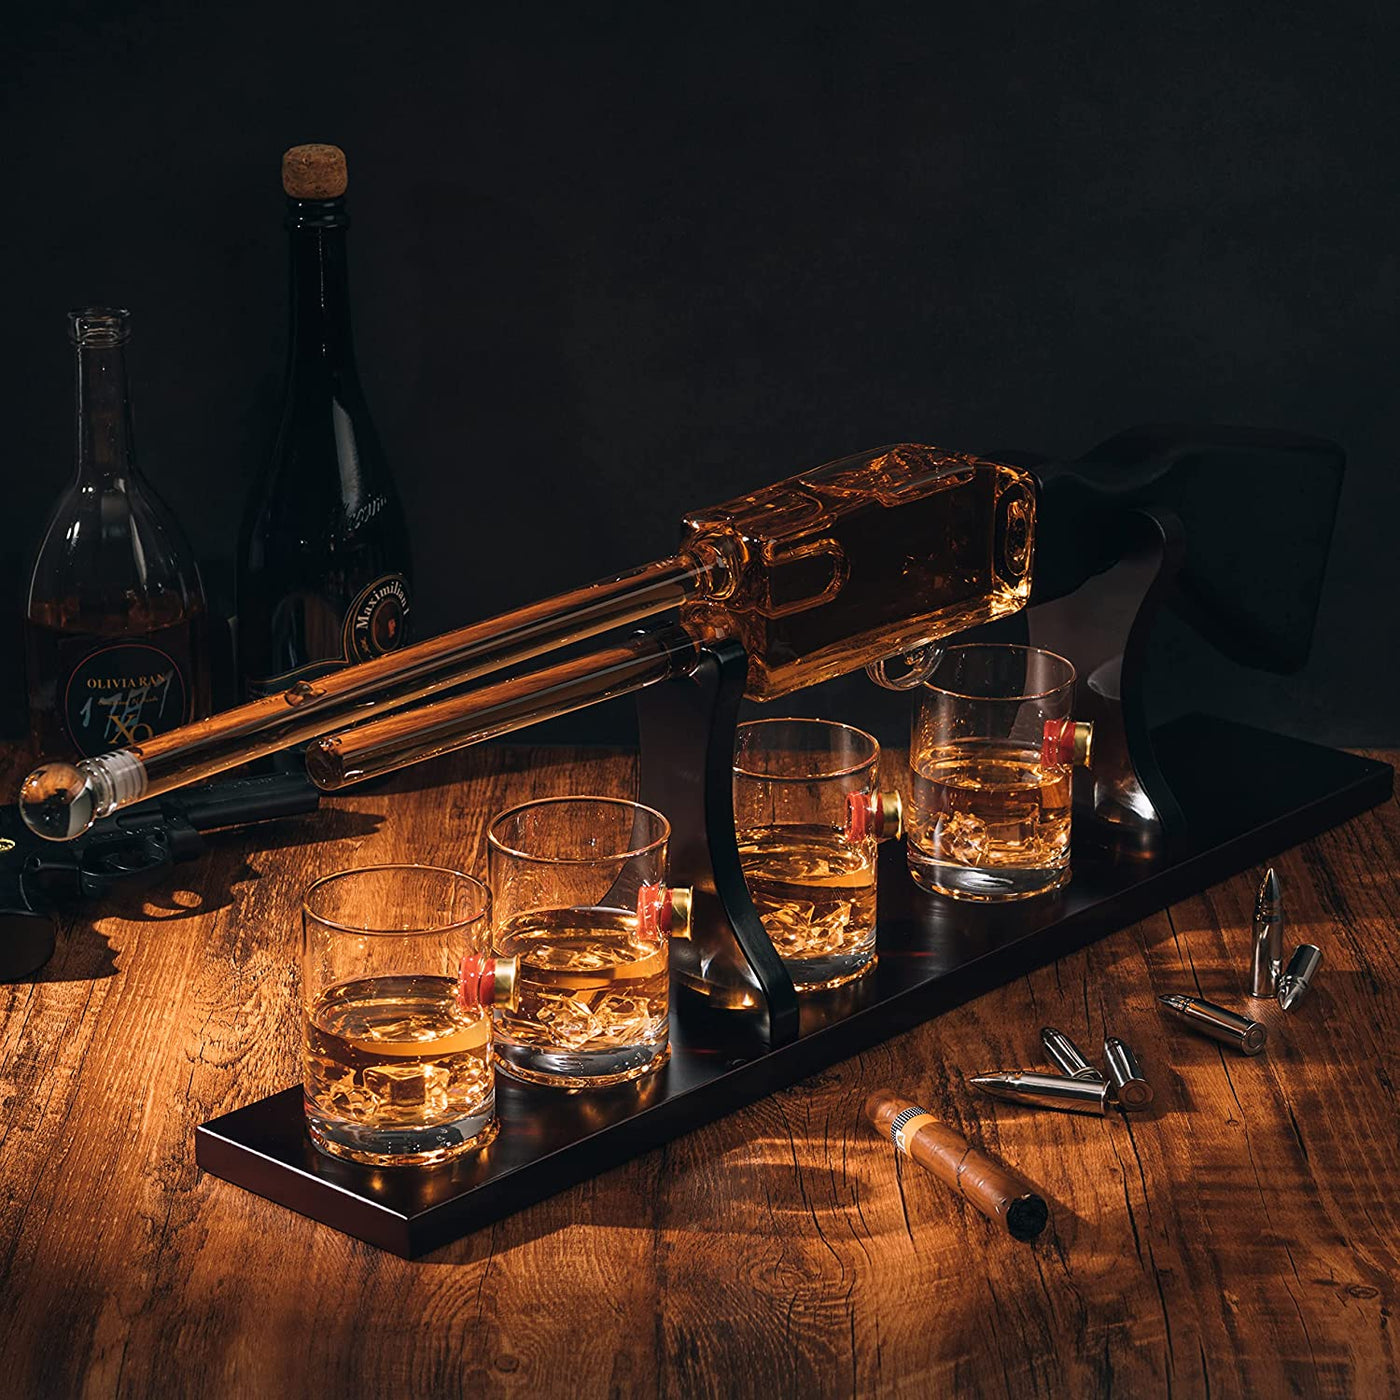 Shotgun Rifle Wine & Whiskey Decanter Set 20oz with Bullet Glasses by Liquor Lux - Firearm Shooting Gun Gifts for Men Veterans, Military, Home Bar, Law Enforcement 30" L 9.5" H